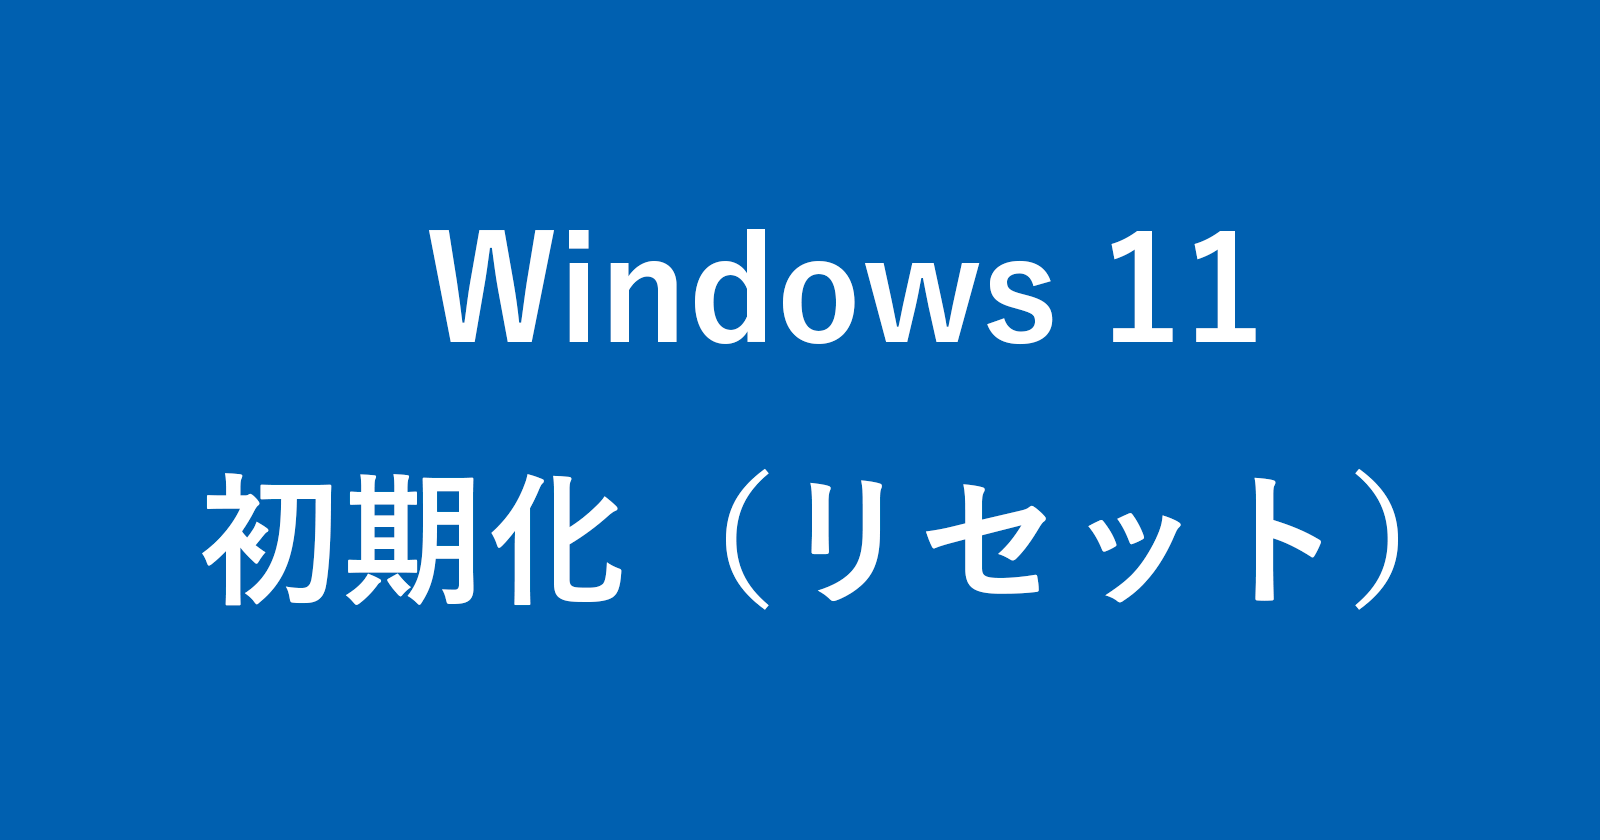 windows 11 reset